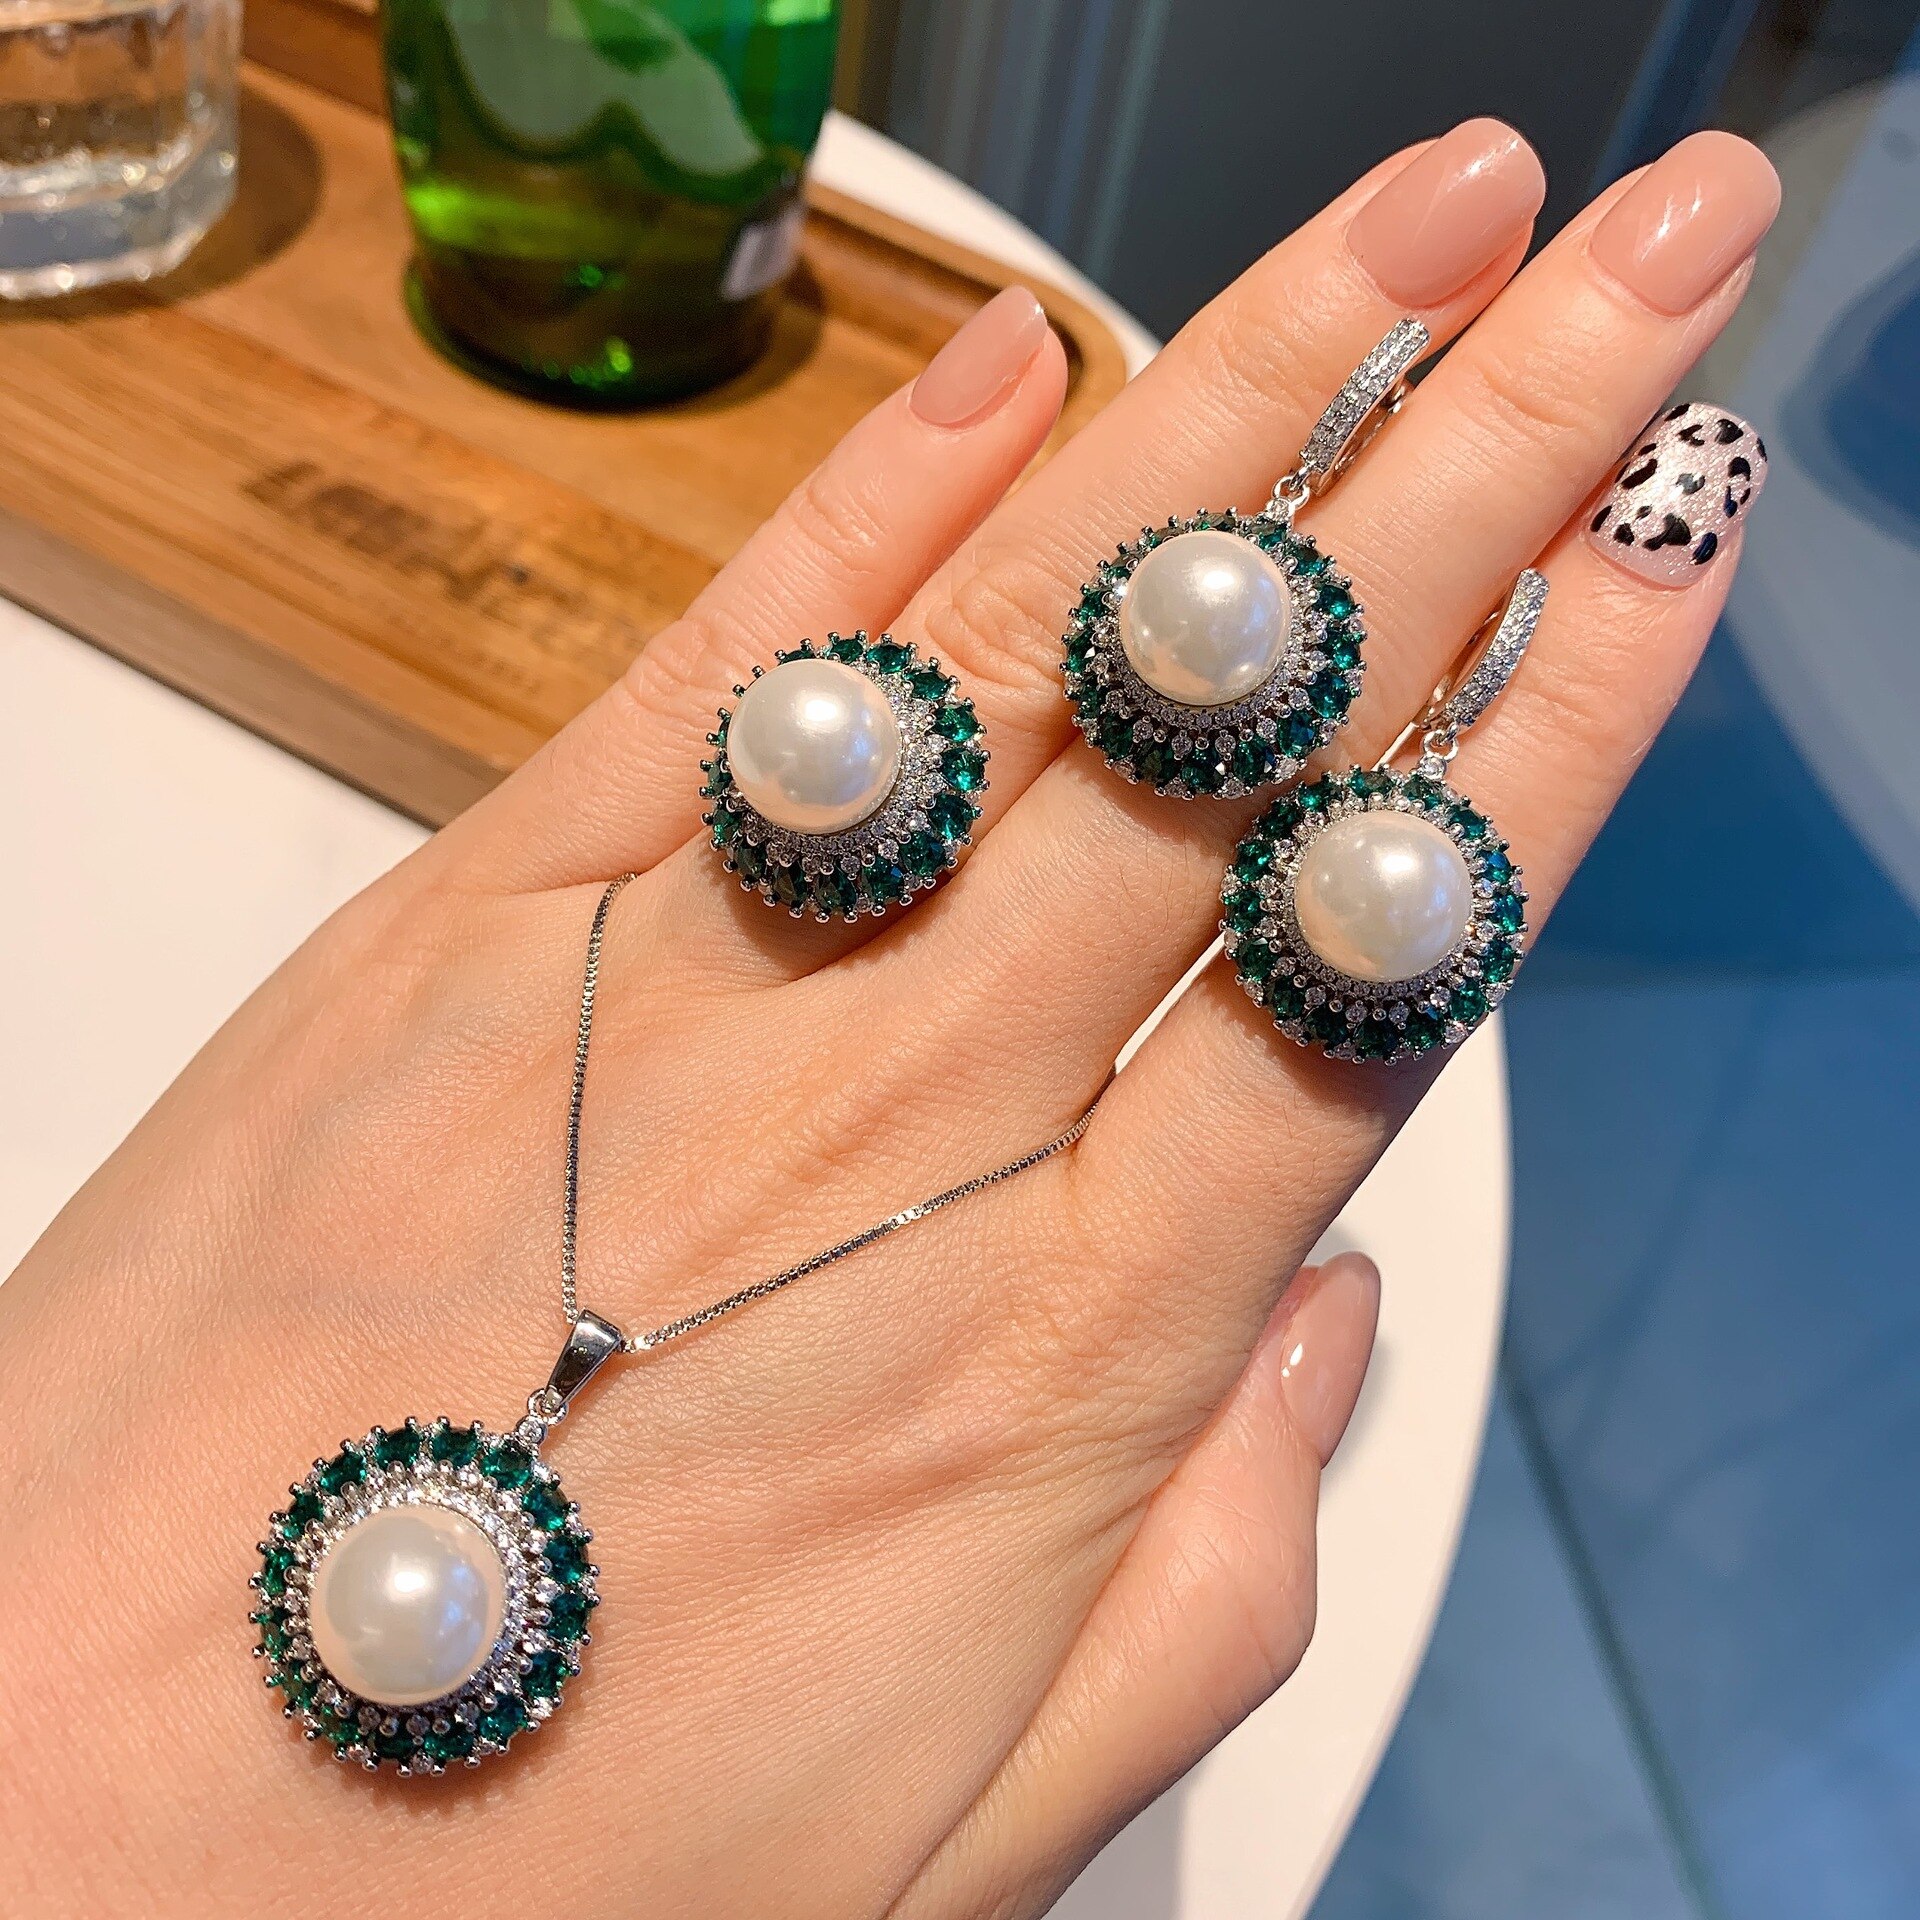 White-Big-Pearl-Cherry-Earrings-Women-Green-Emerald-Pendant-Necklace-Ring-Set-Jewelry-Wedding-Anniversary-Gift.jpg